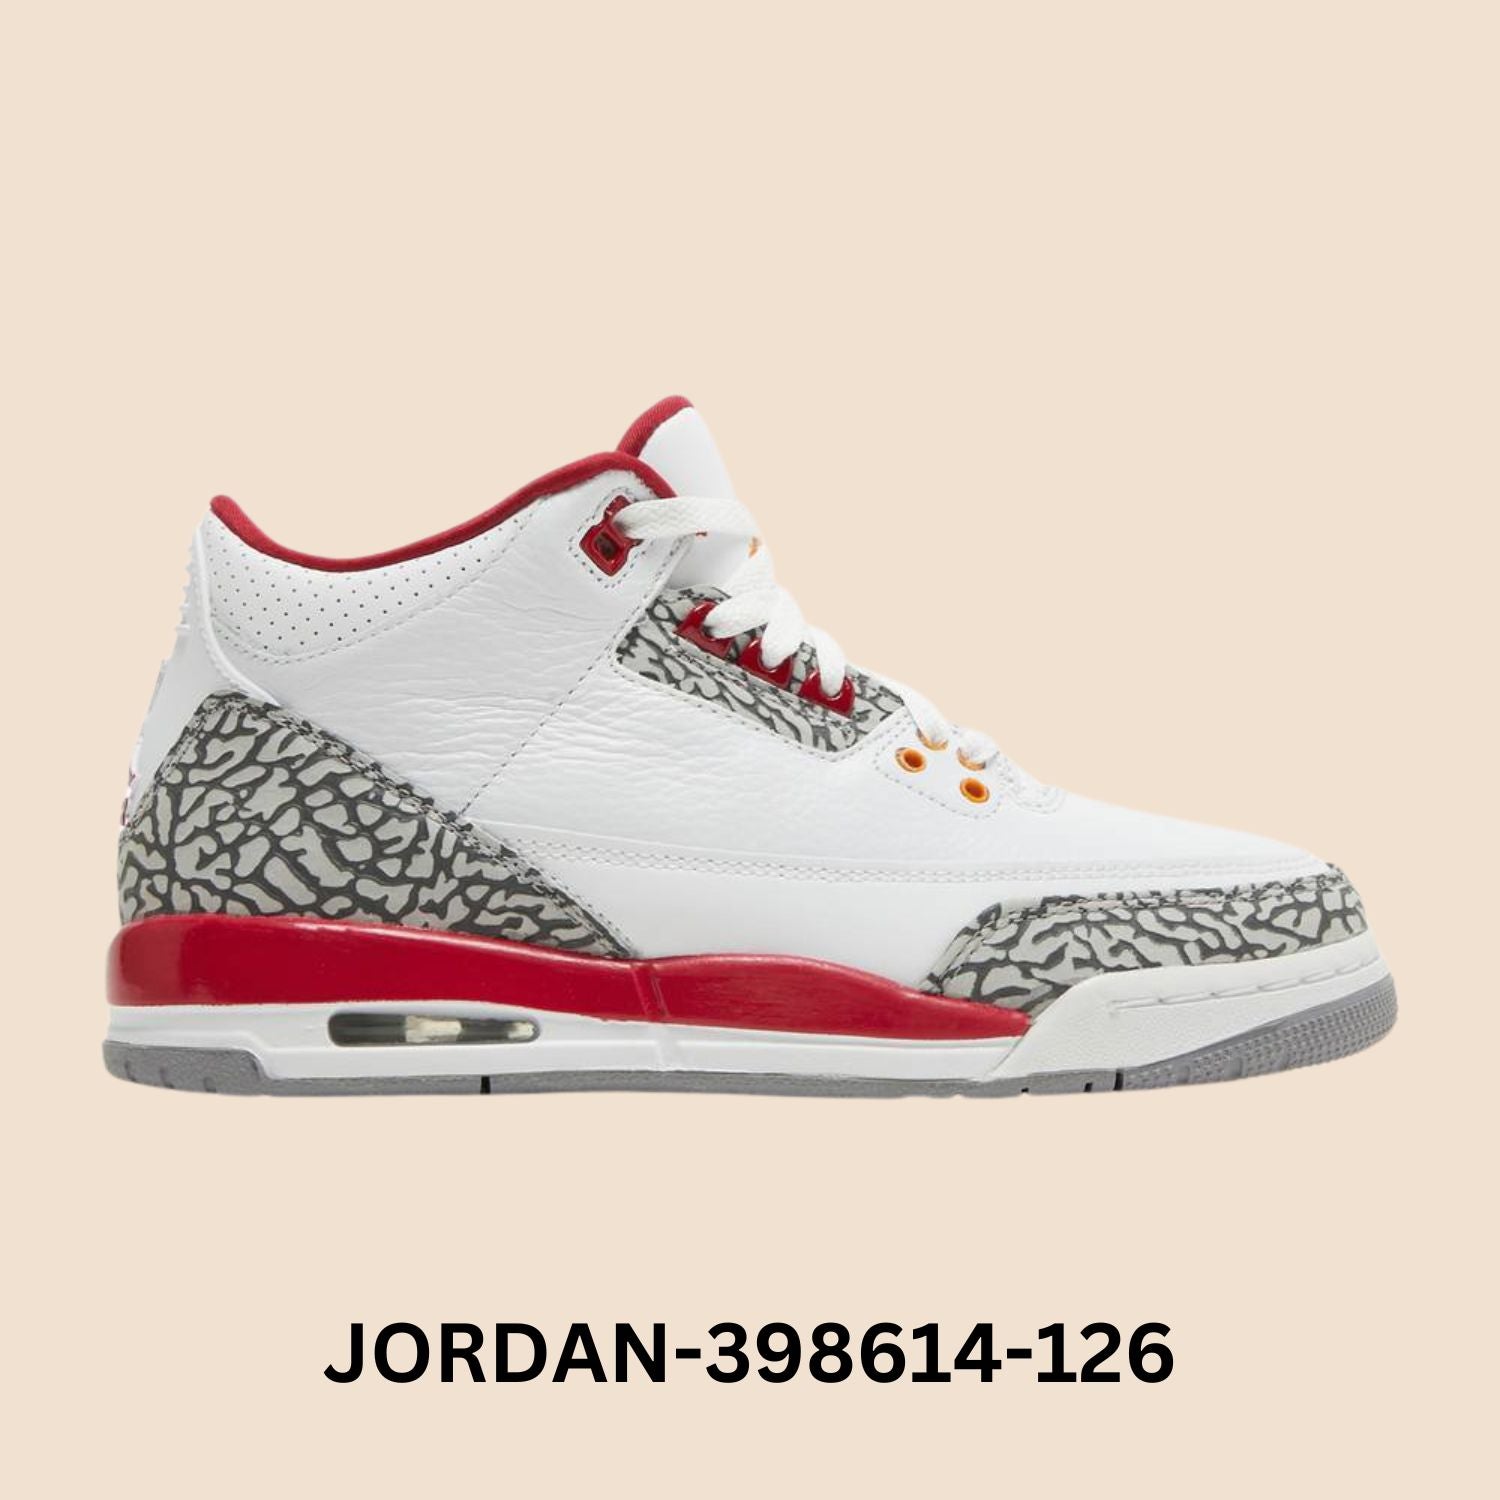 Air Jordan 3 Retro  "CARDINAL RED" Grade School Style# 398614-126